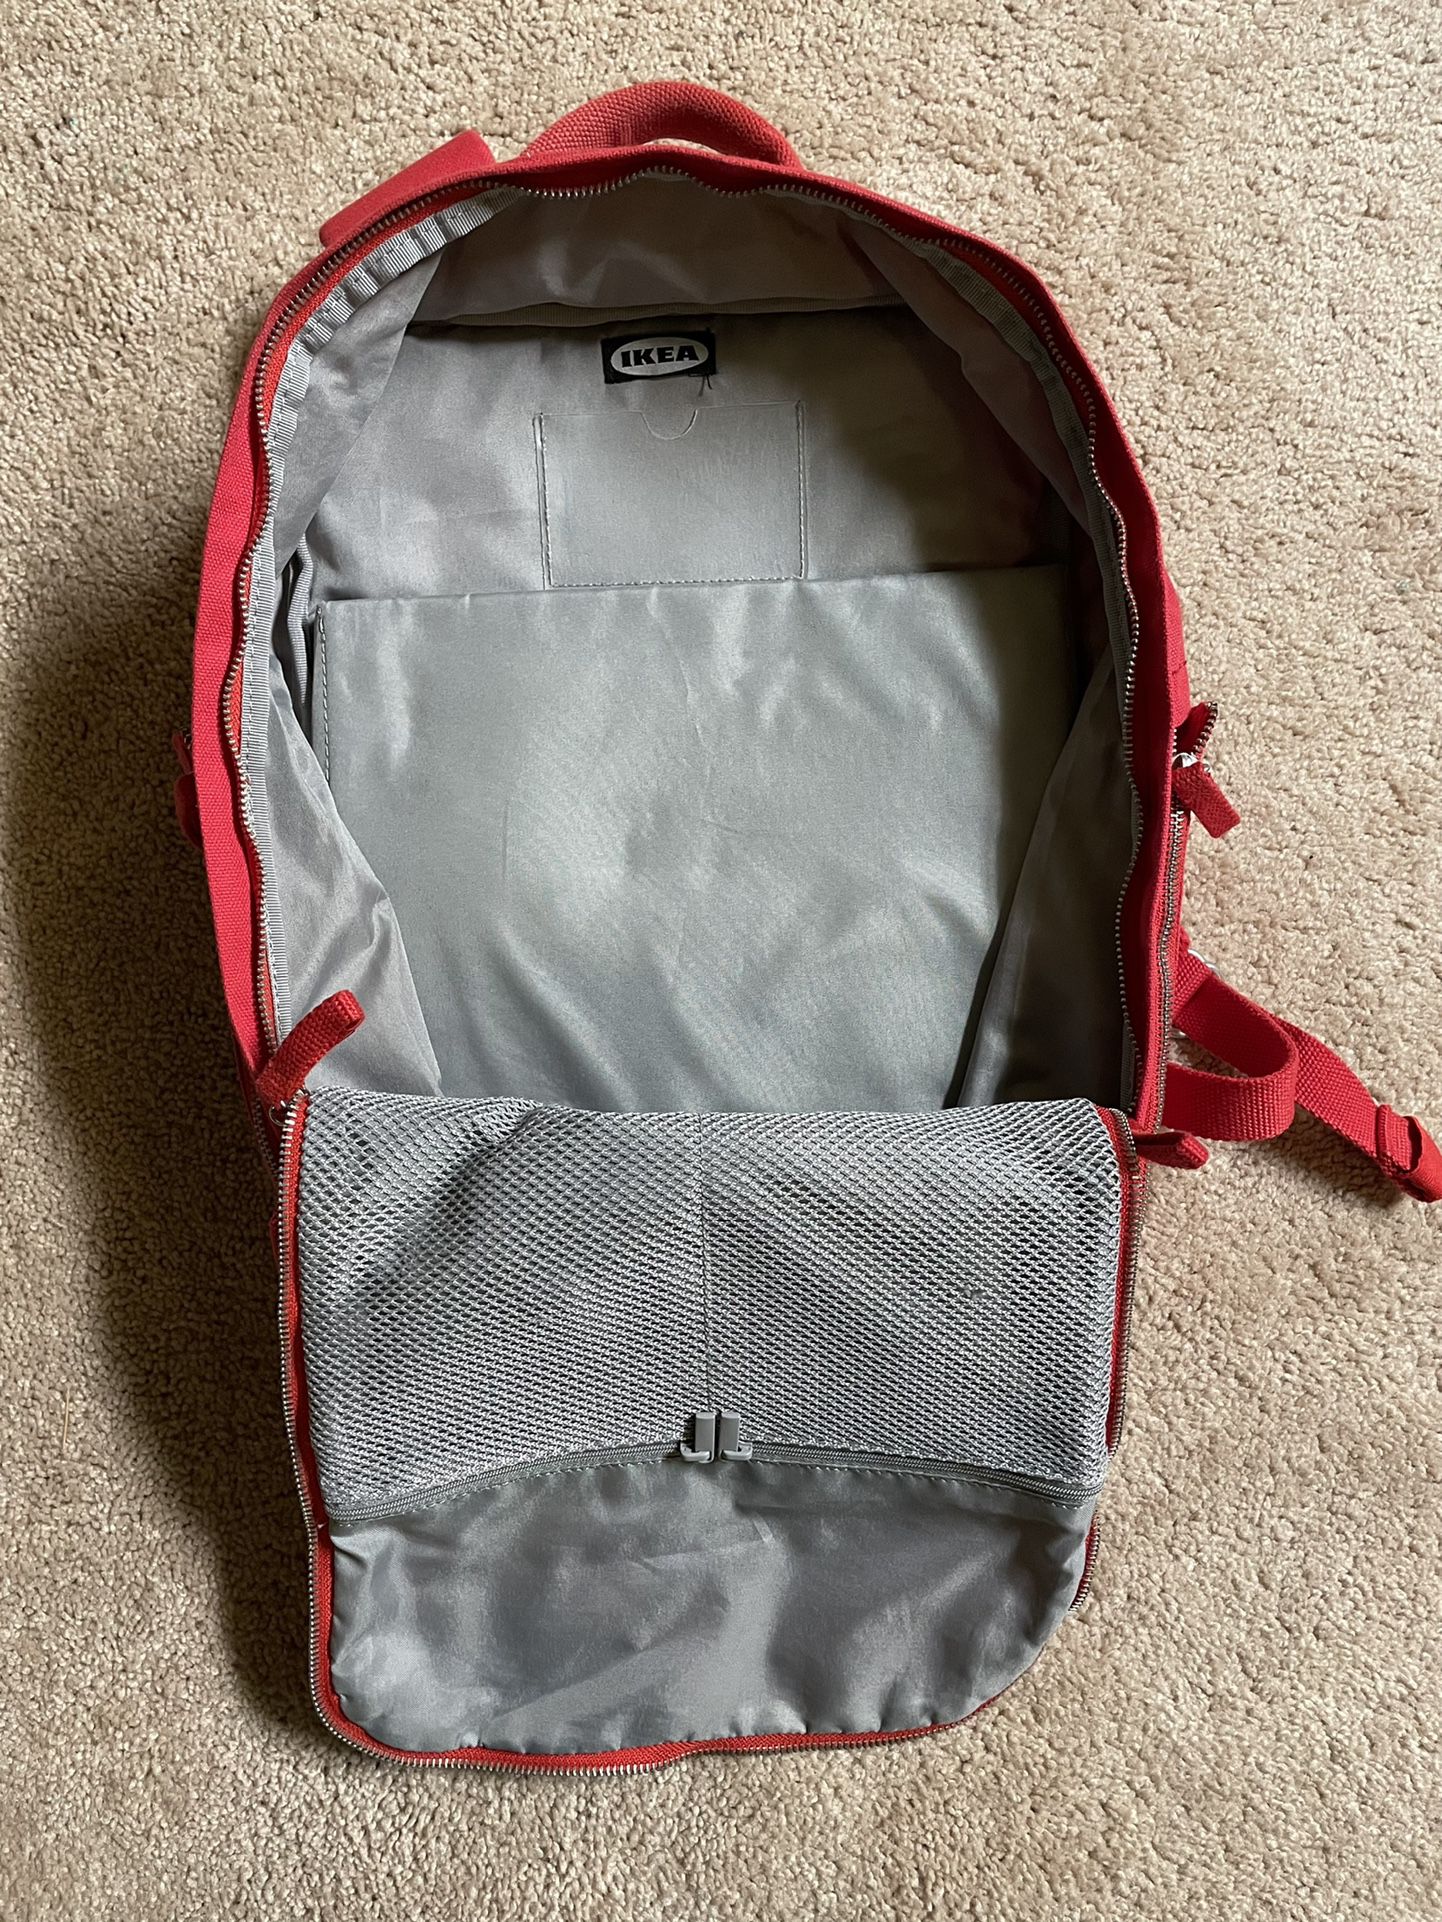 Ikea Backpack 